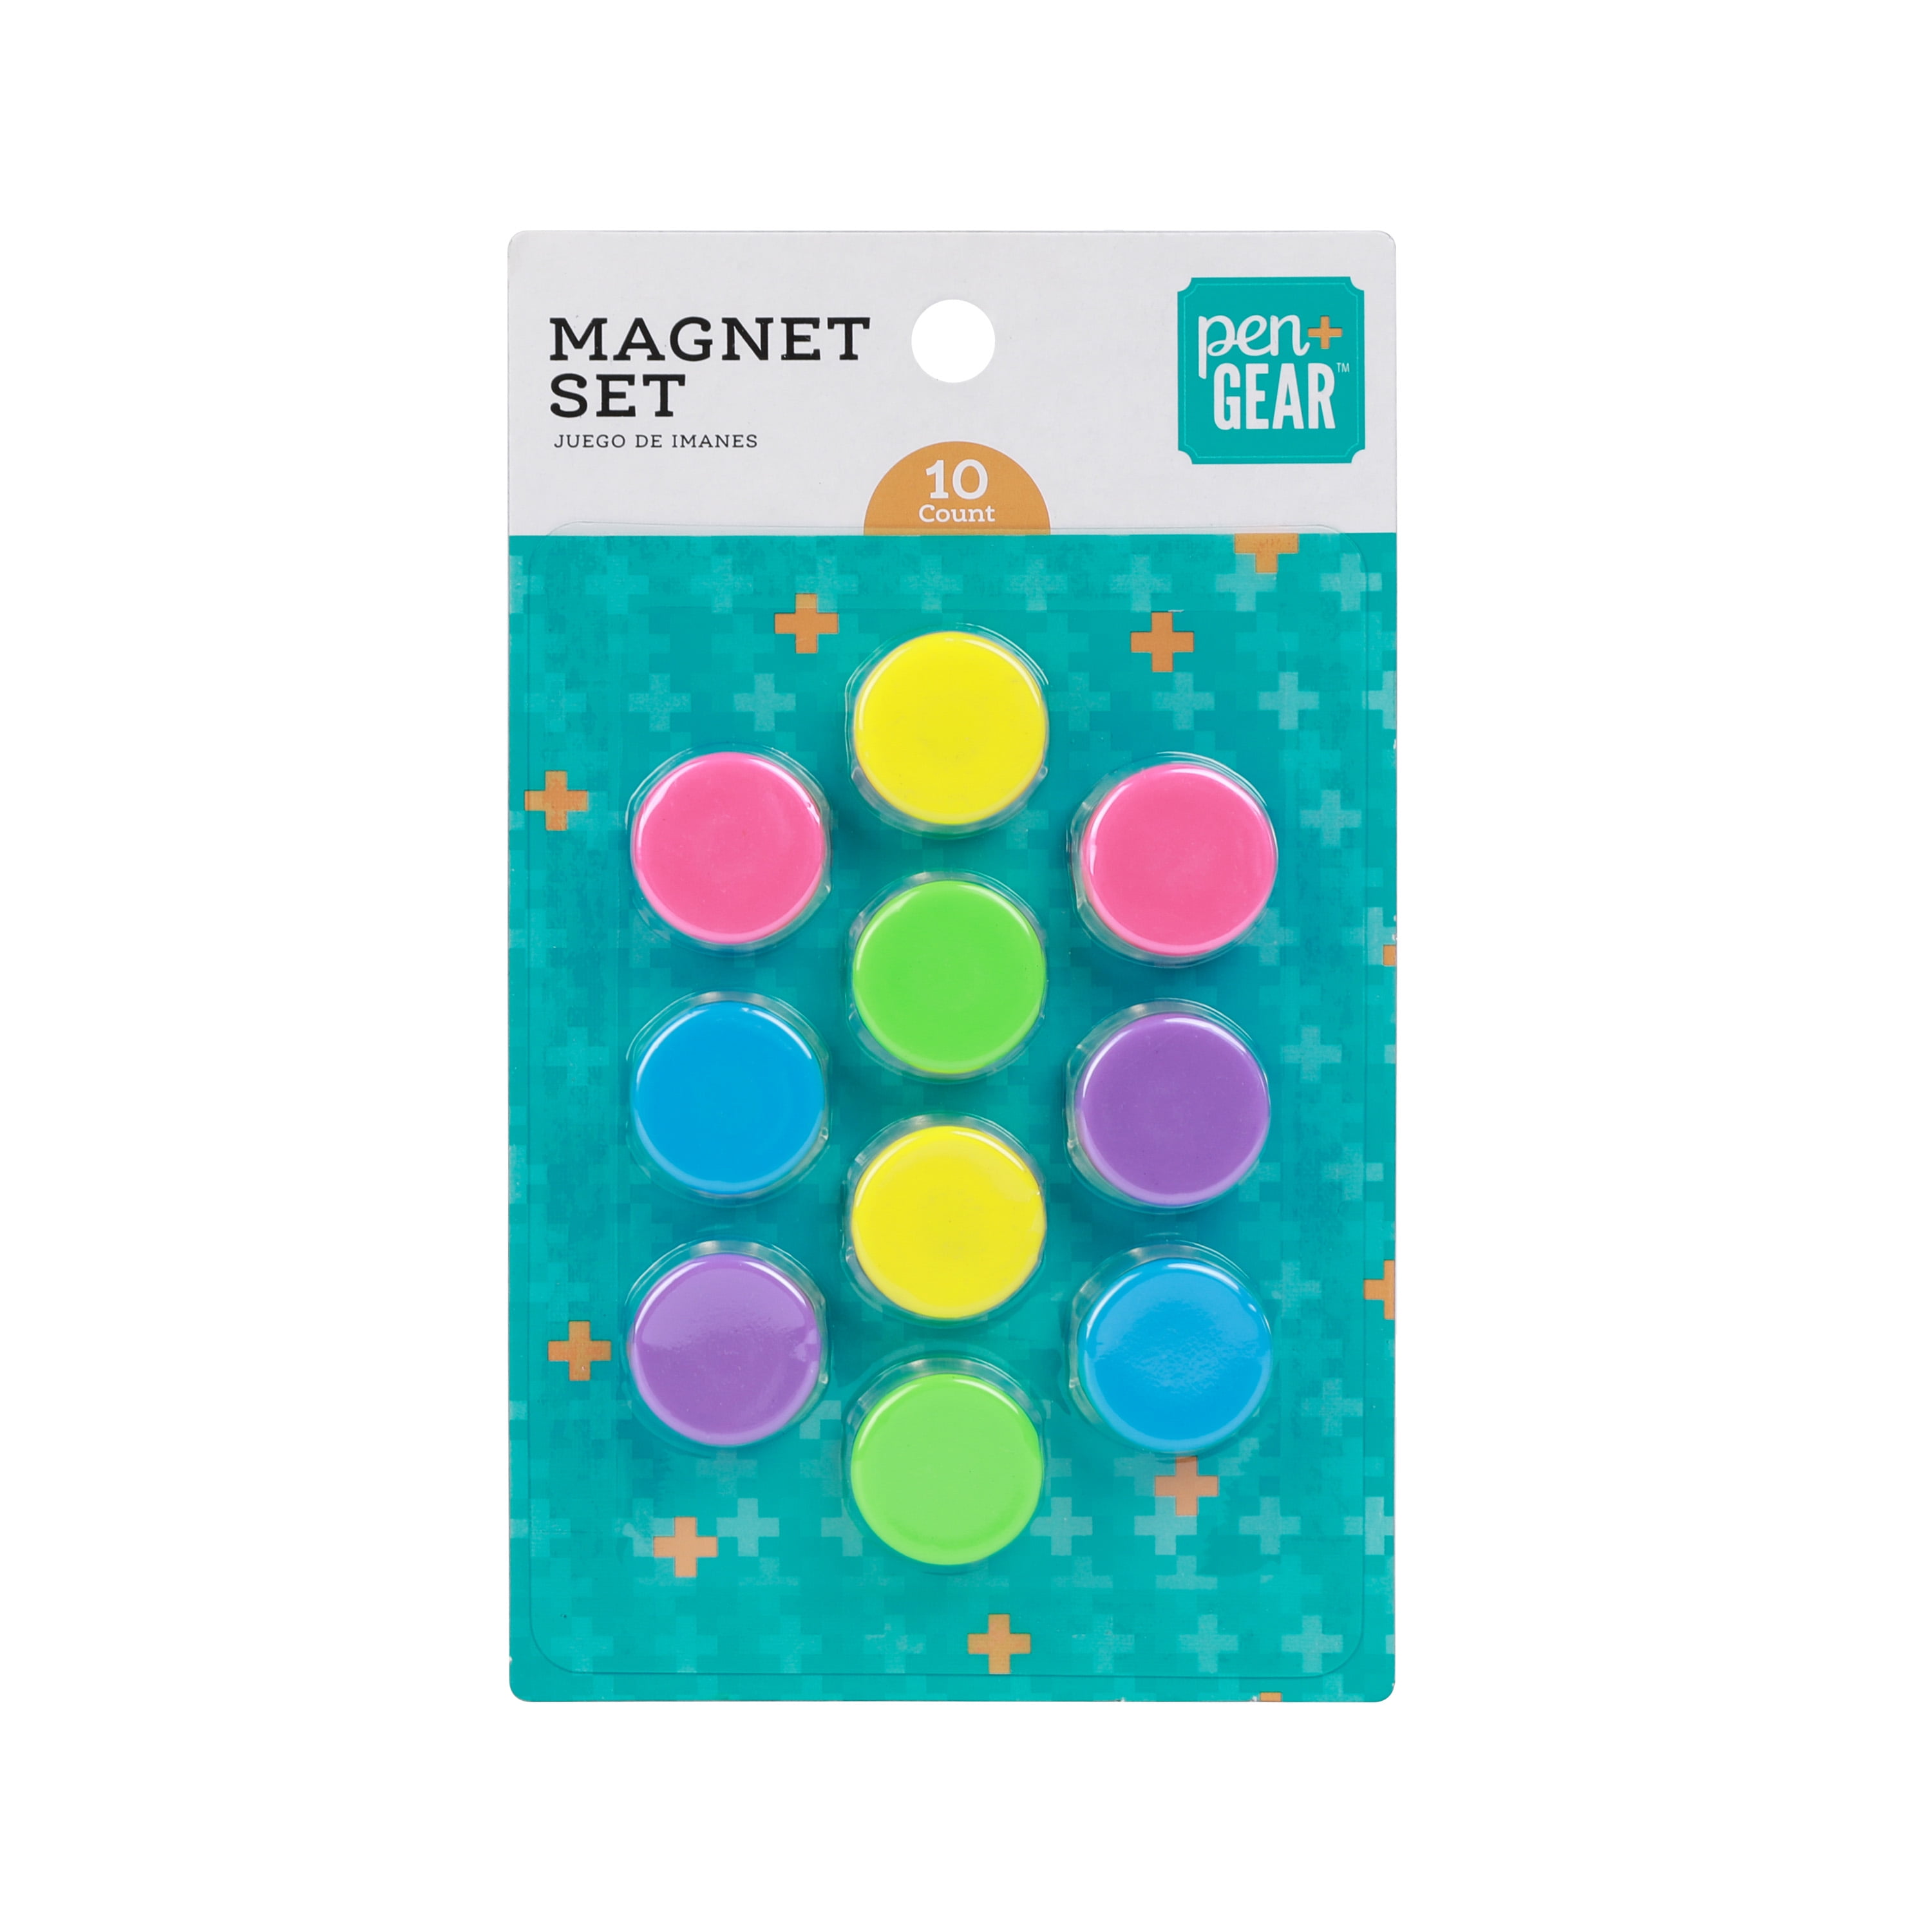 Pen+Gear Magnet Set, 10 Count, Multi-Colored